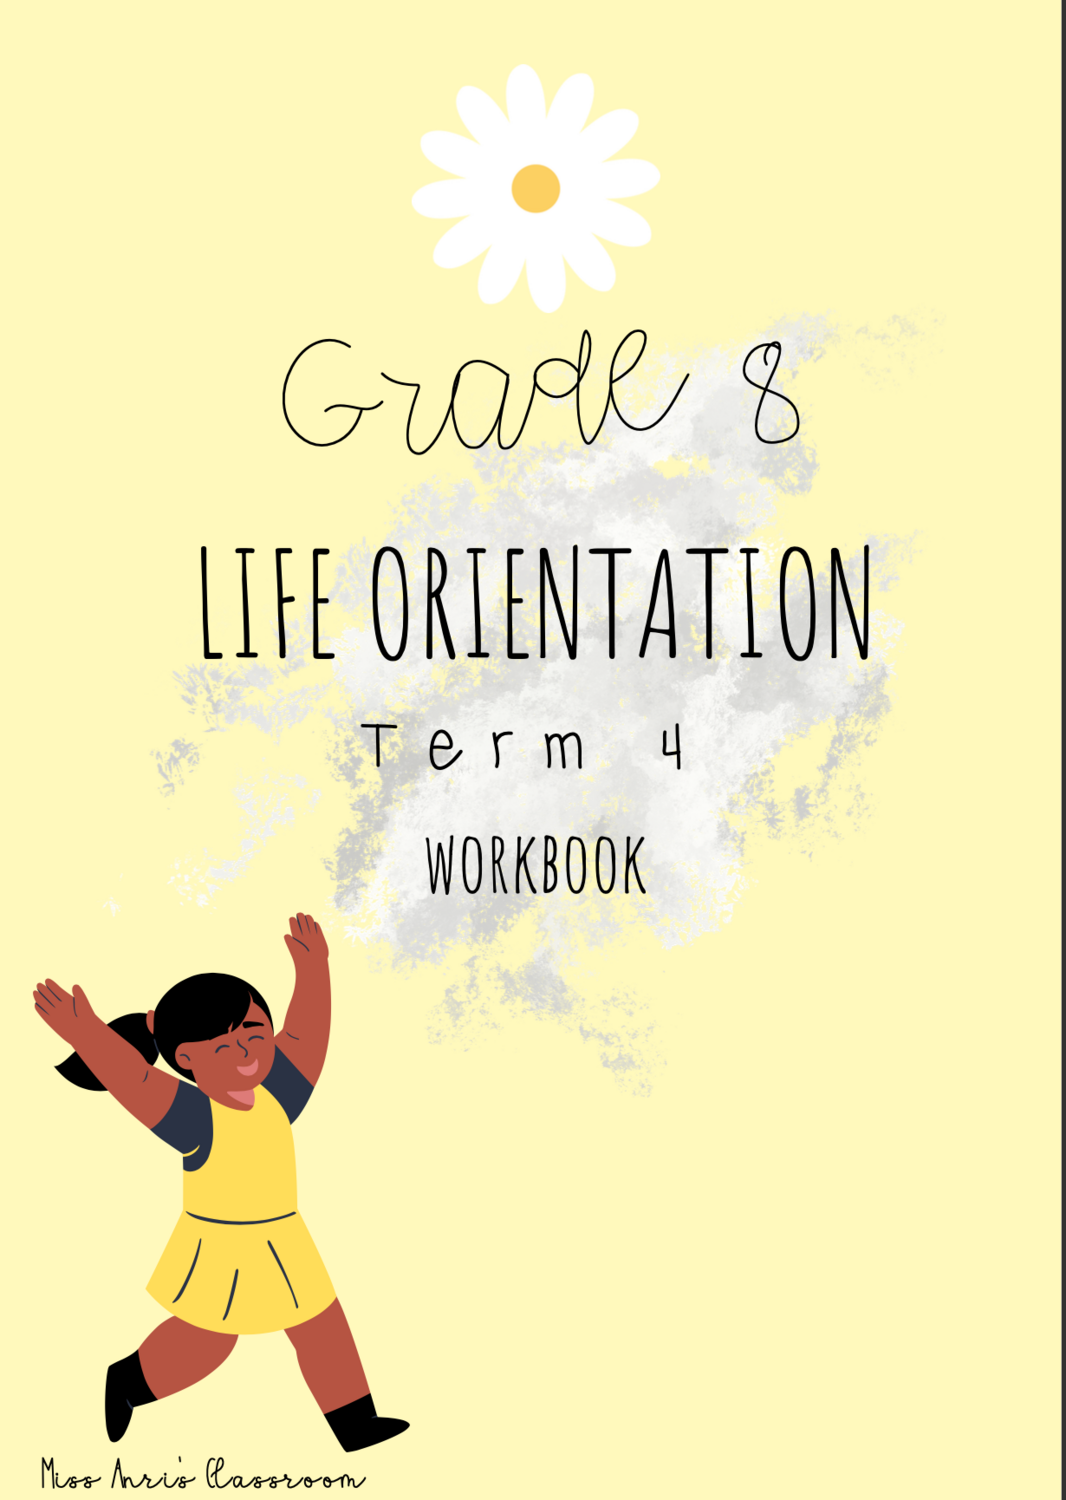 Grade 8 Life Orientation term 4 workbook